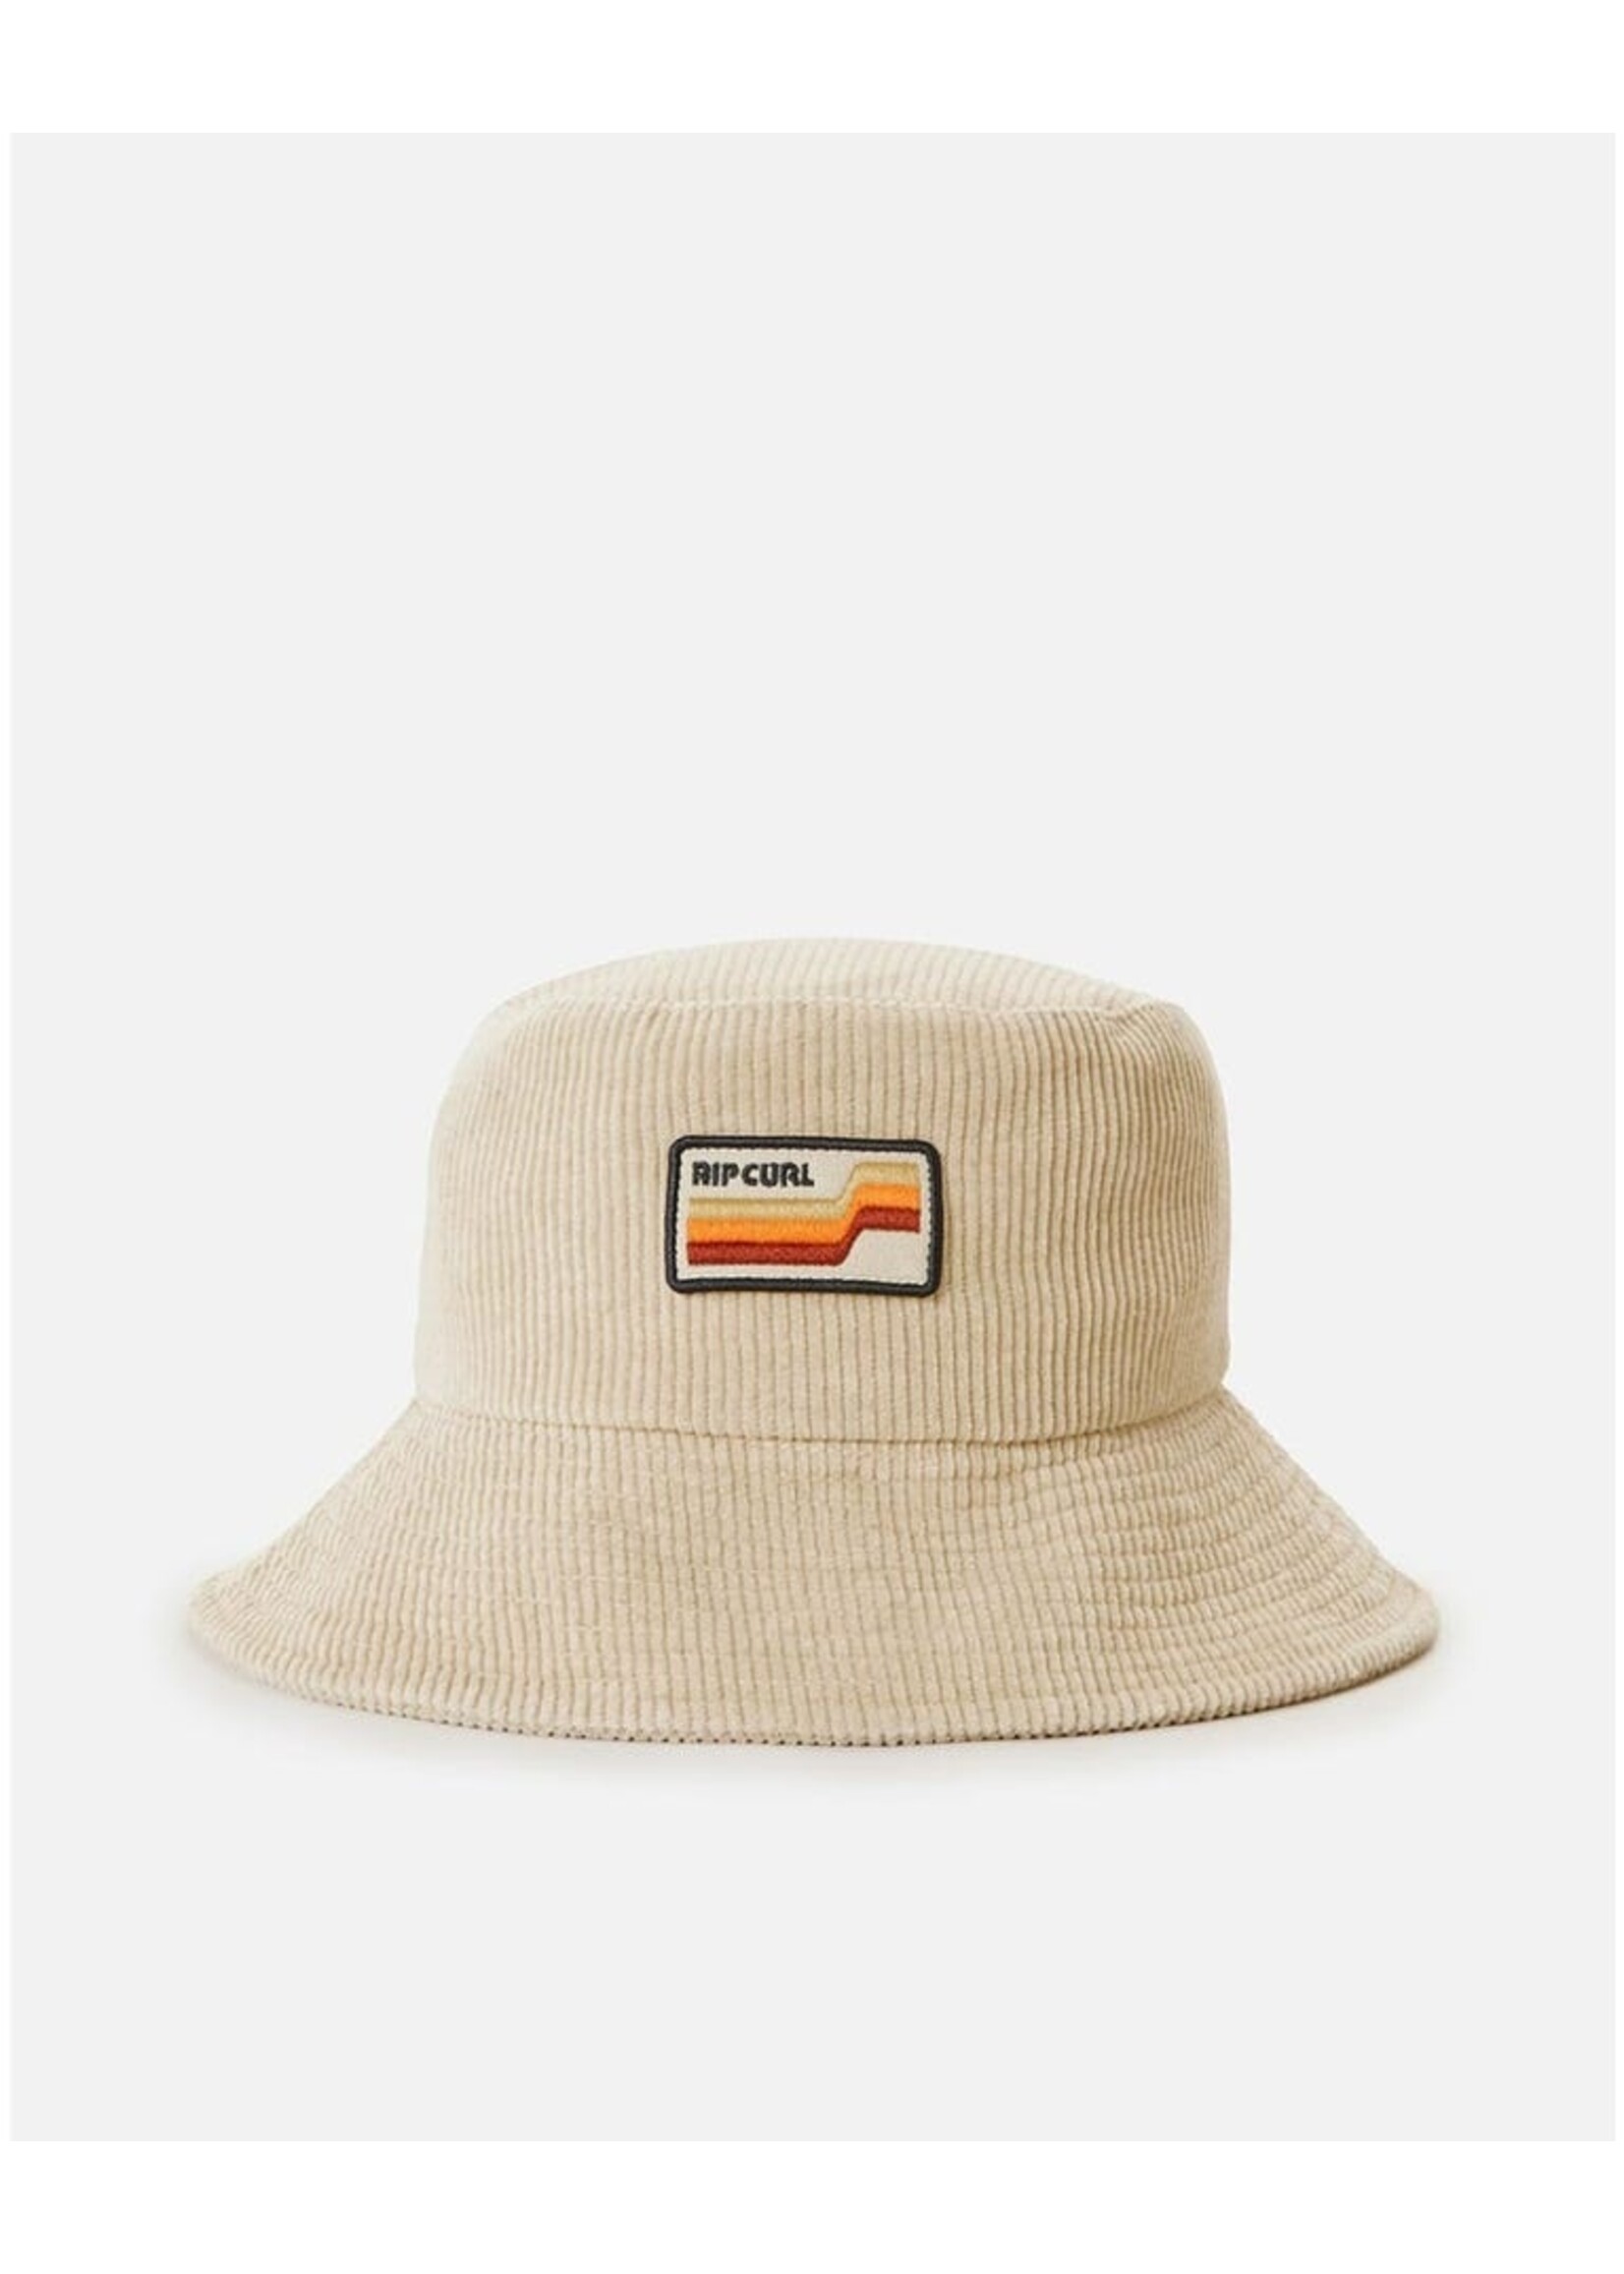 ripcurl Ripcurl Trippin Cord Bucket Hat